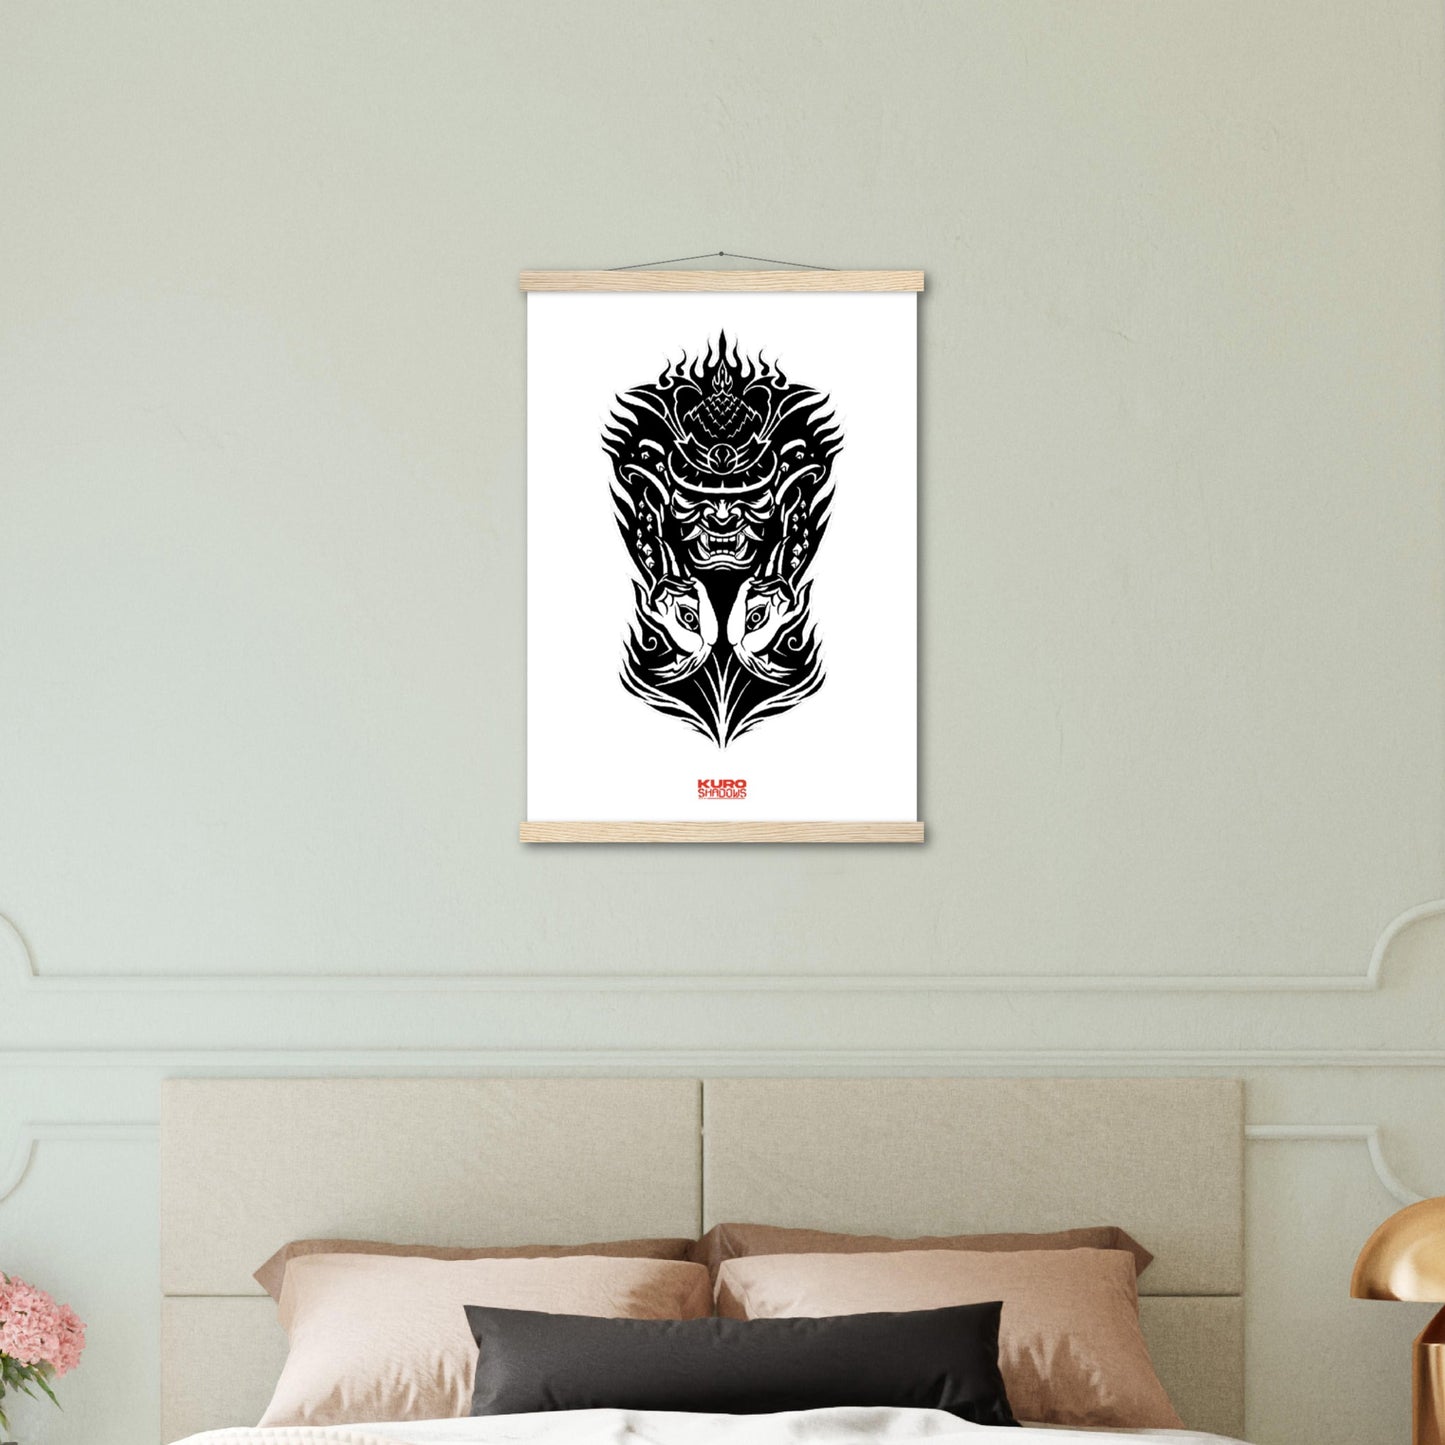 KURO SHADOWS "Black Samurai" Premium Matte Paper Poster with Hanger